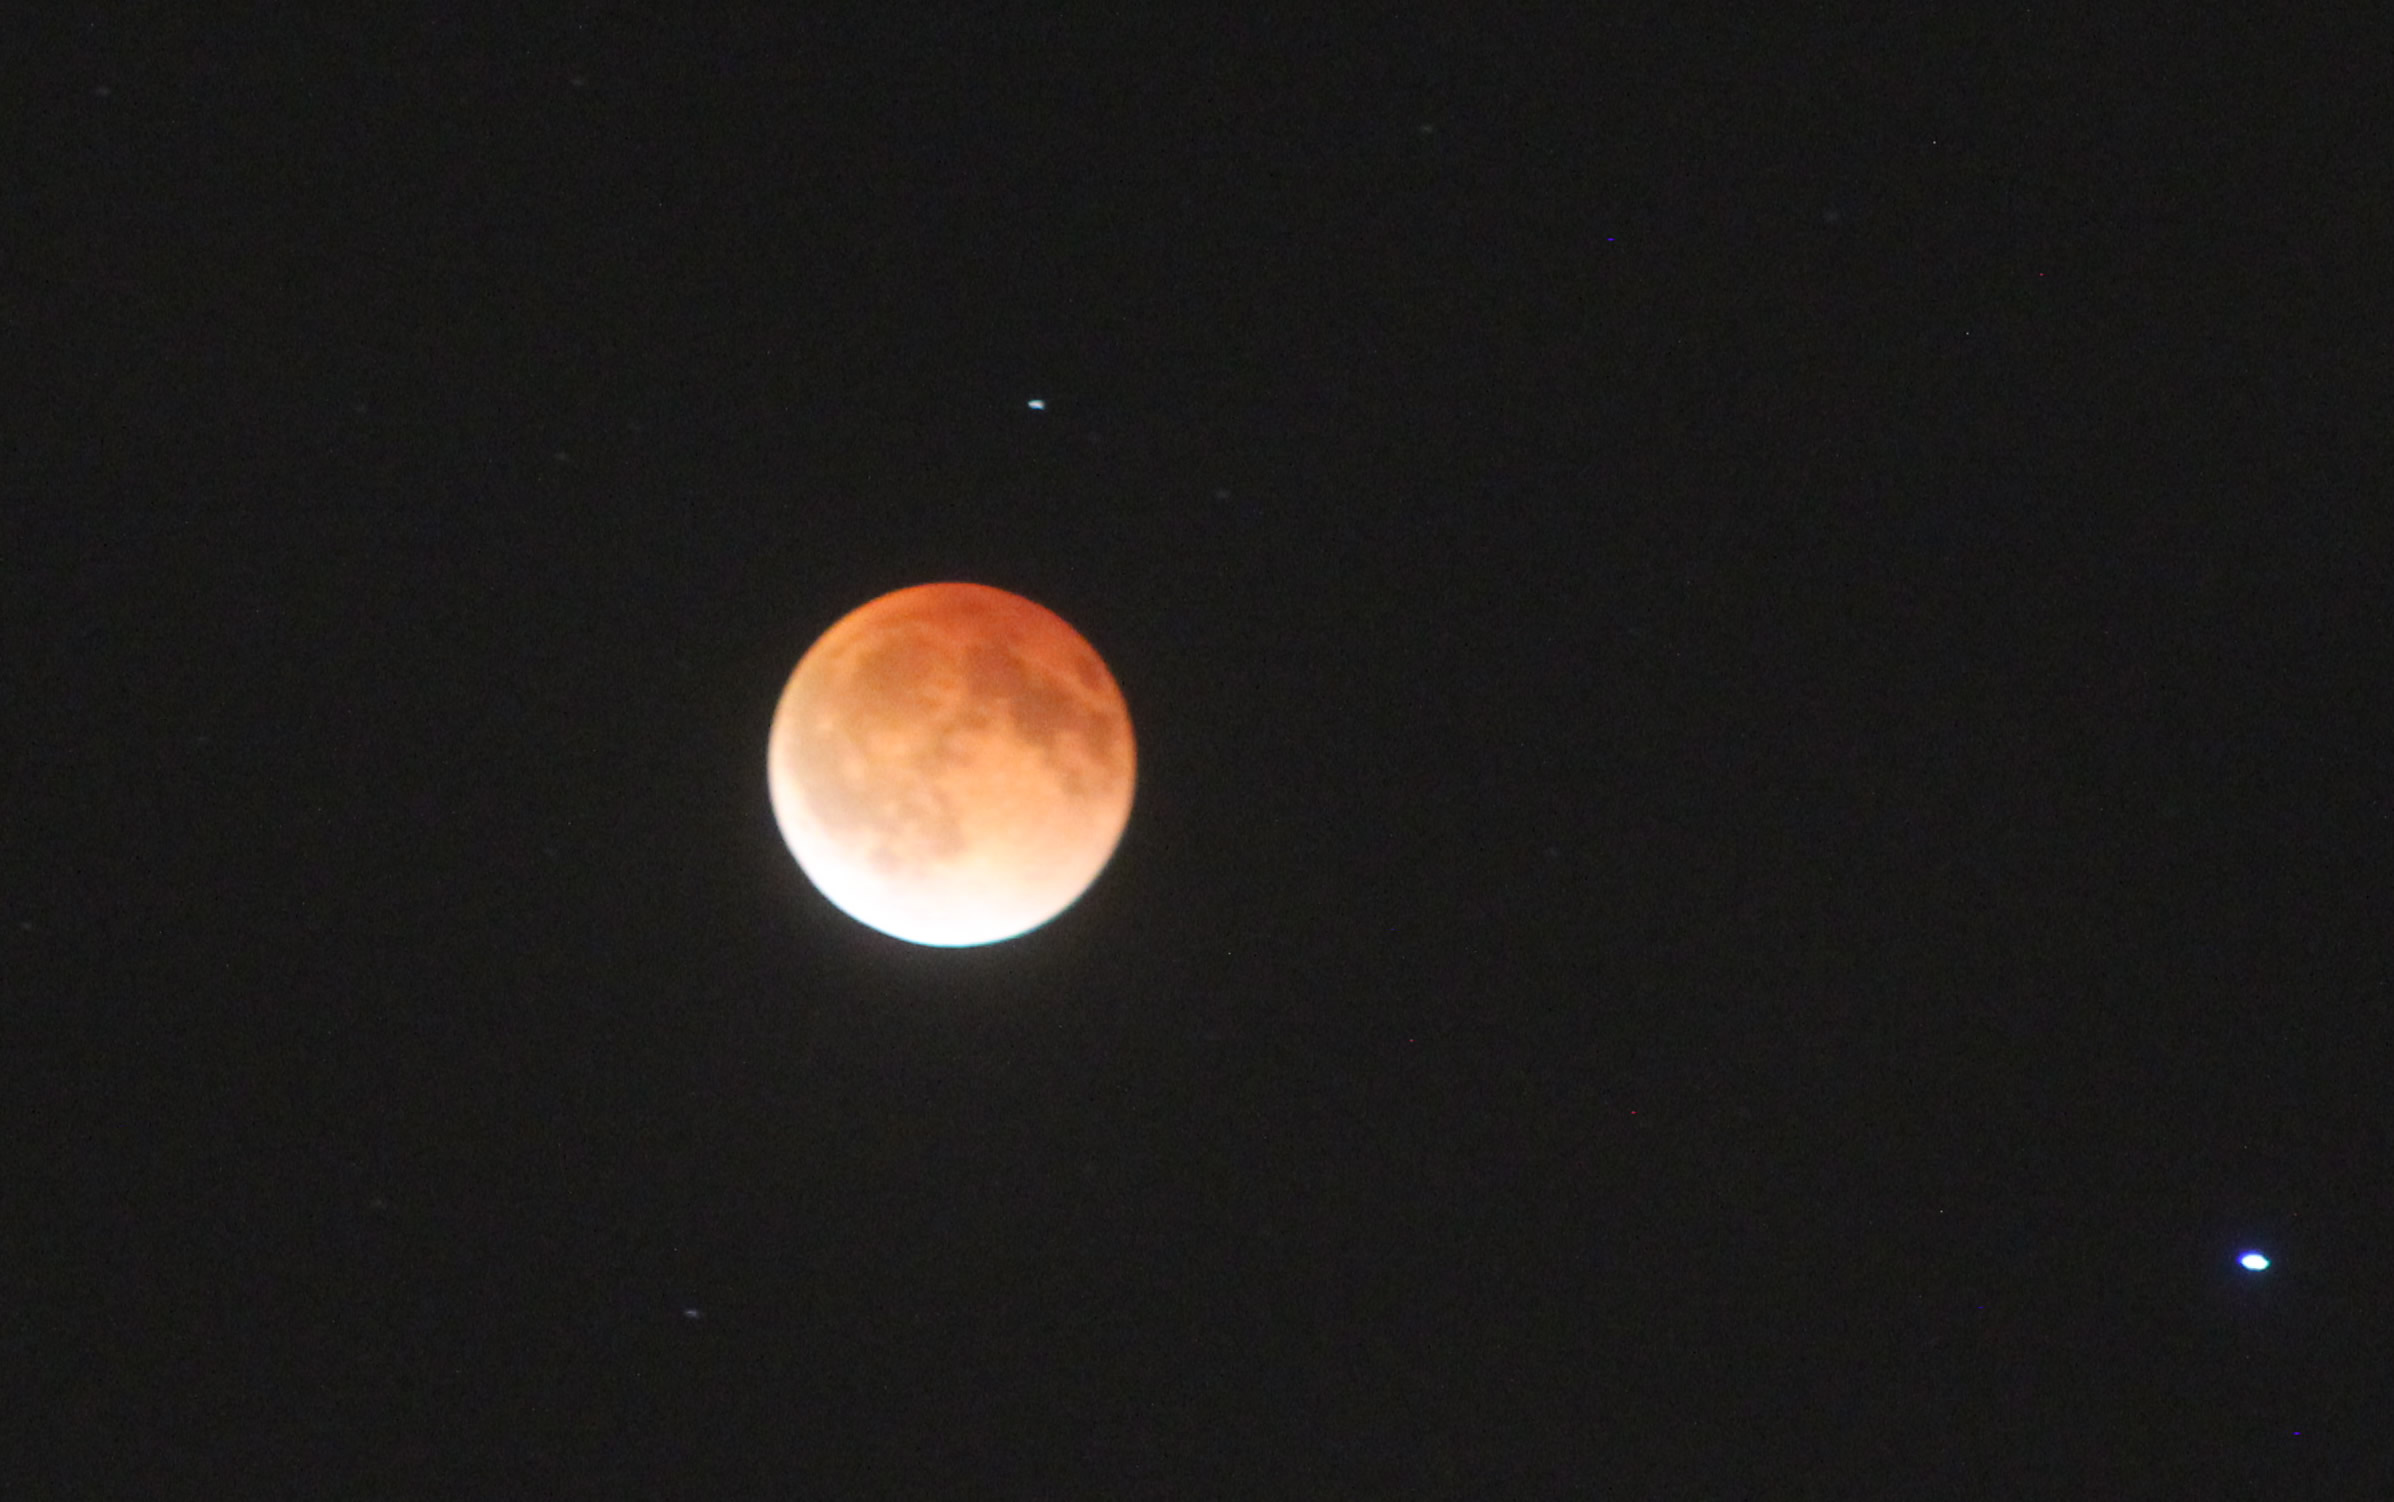 Lunar eclipse 2014 April 14 Tuesday 1:29am